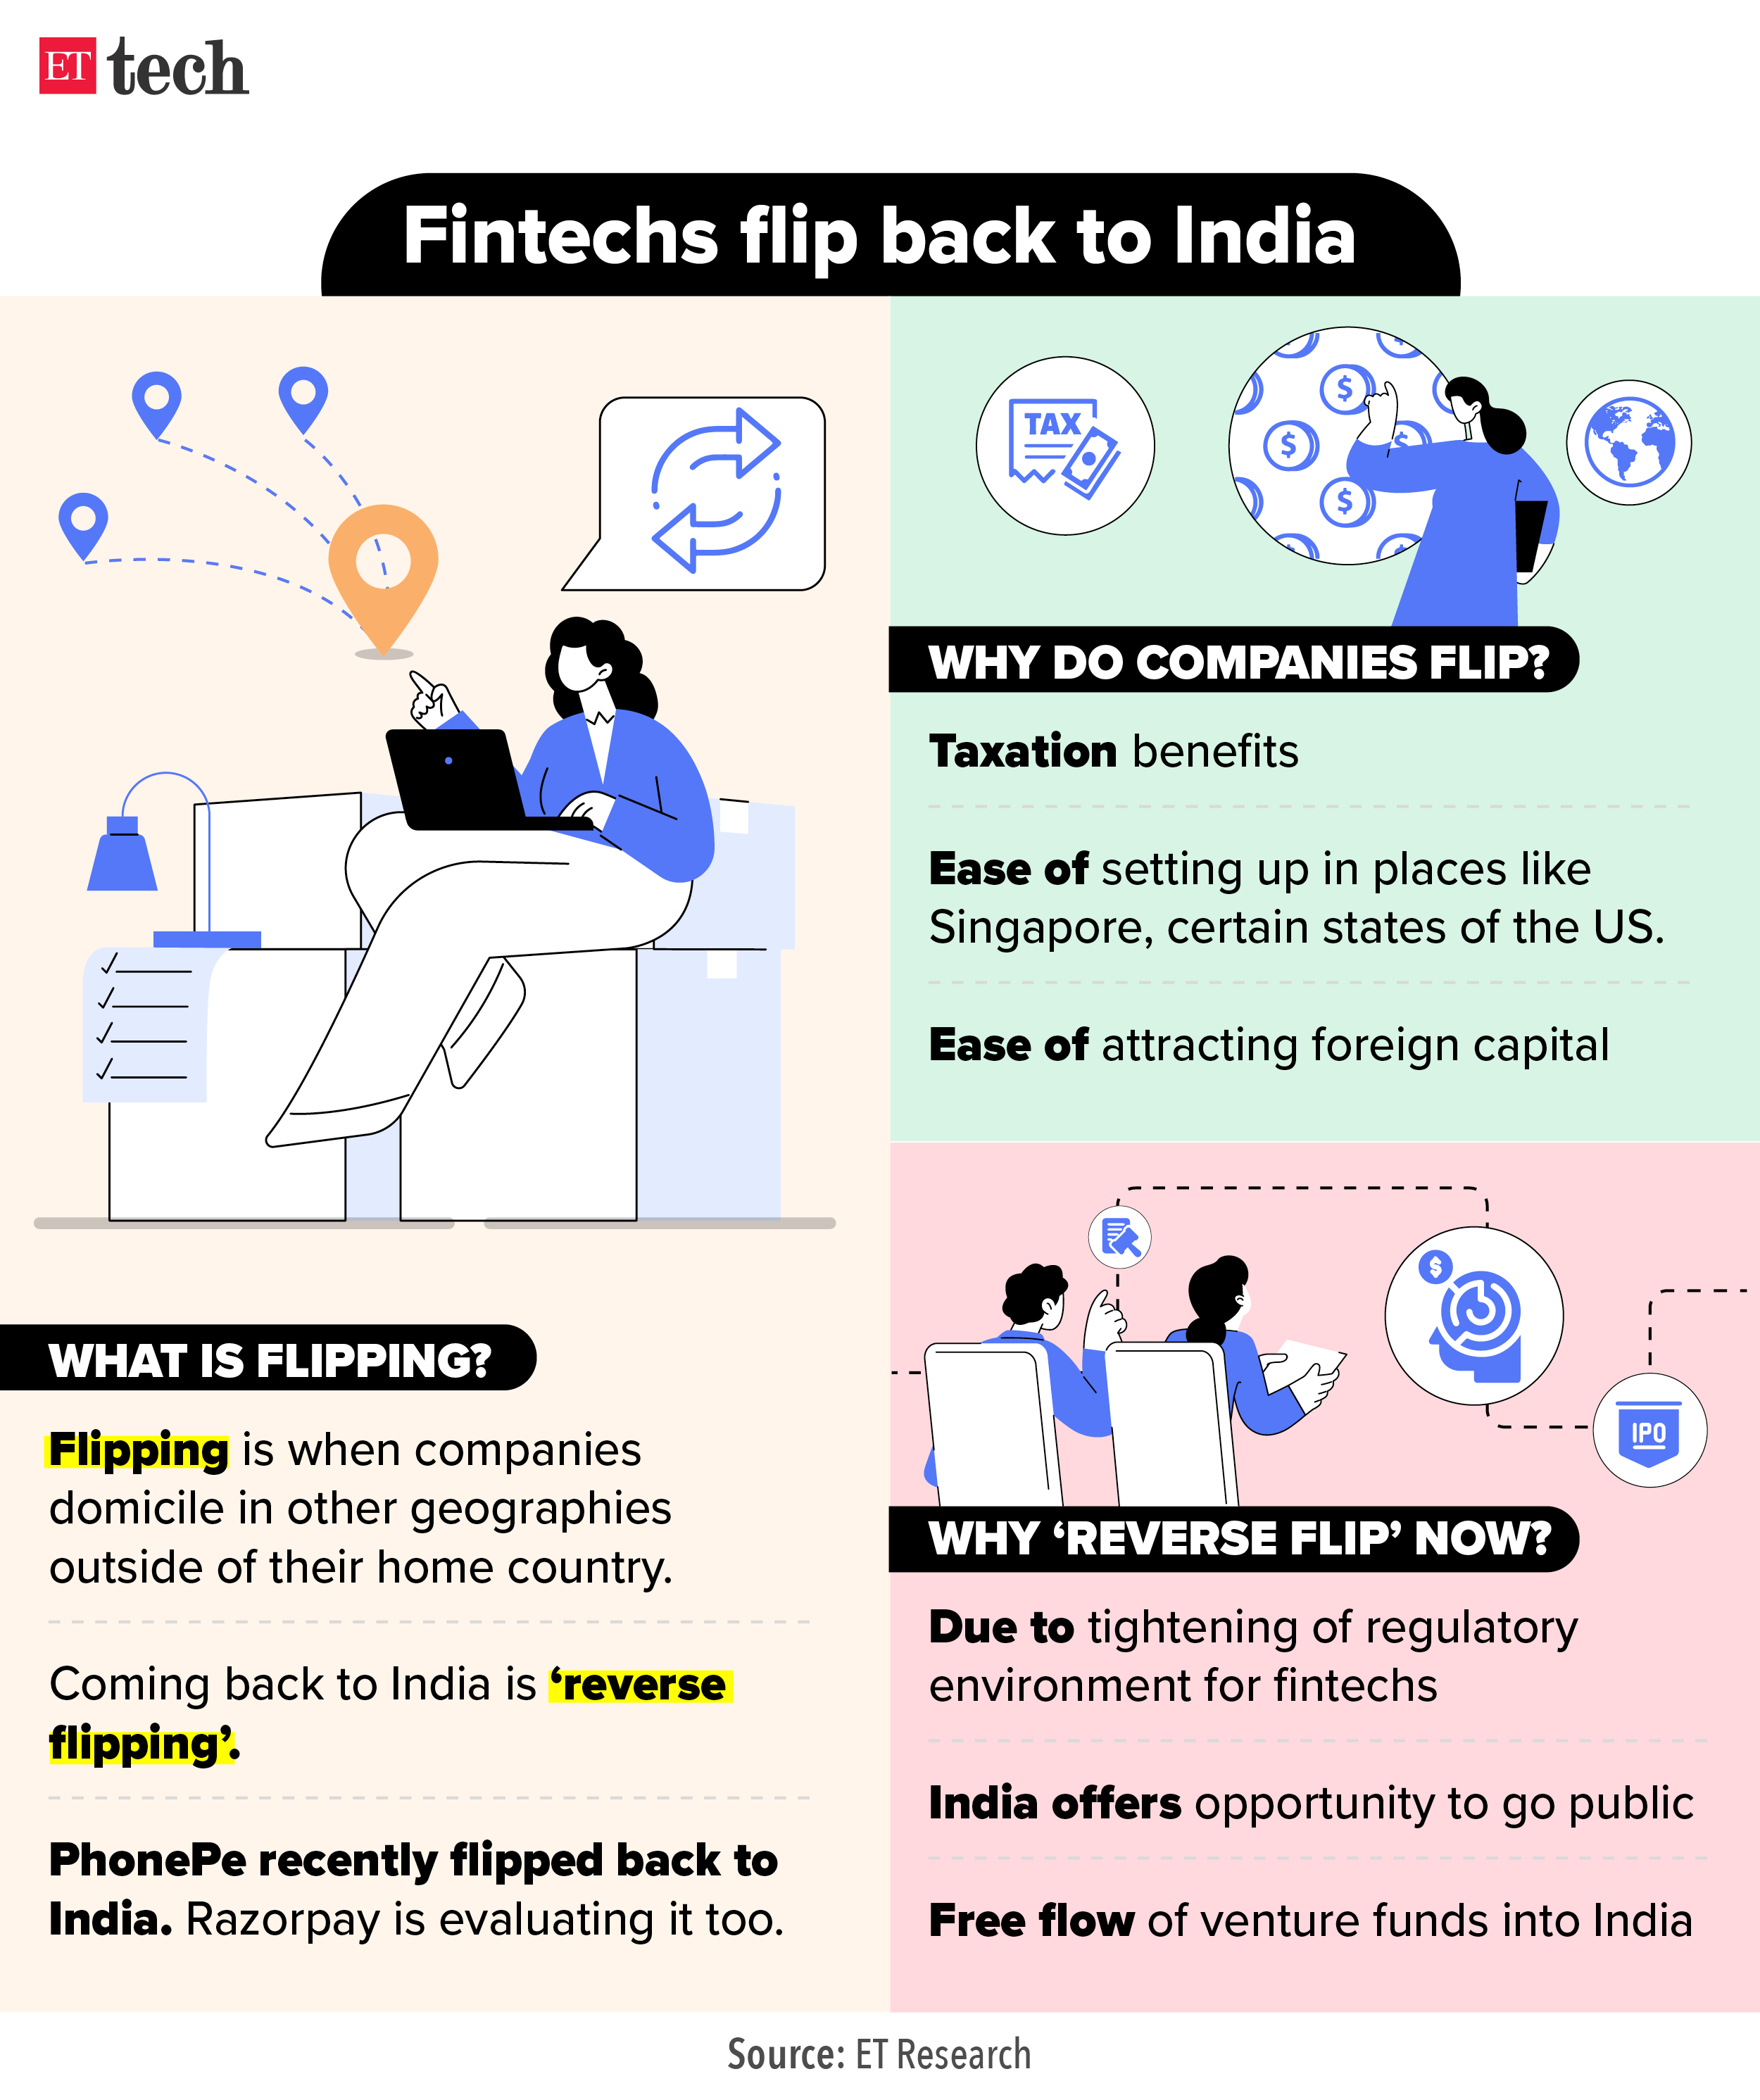 Fintechs flip back to India_Graphic_ETTECH